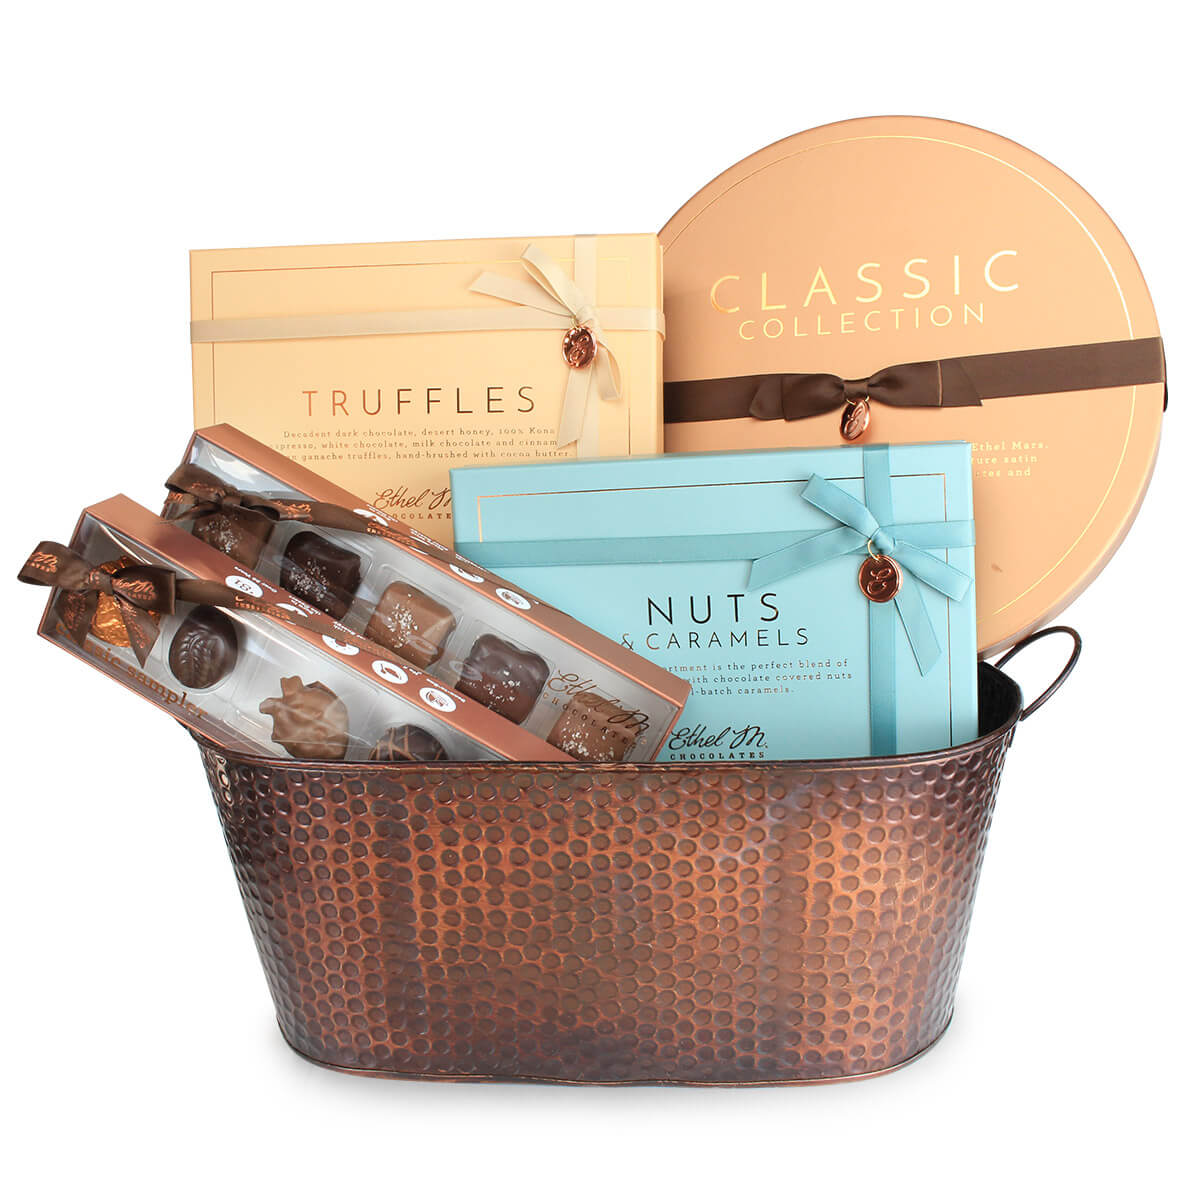 7 Chocolate gift box ideas